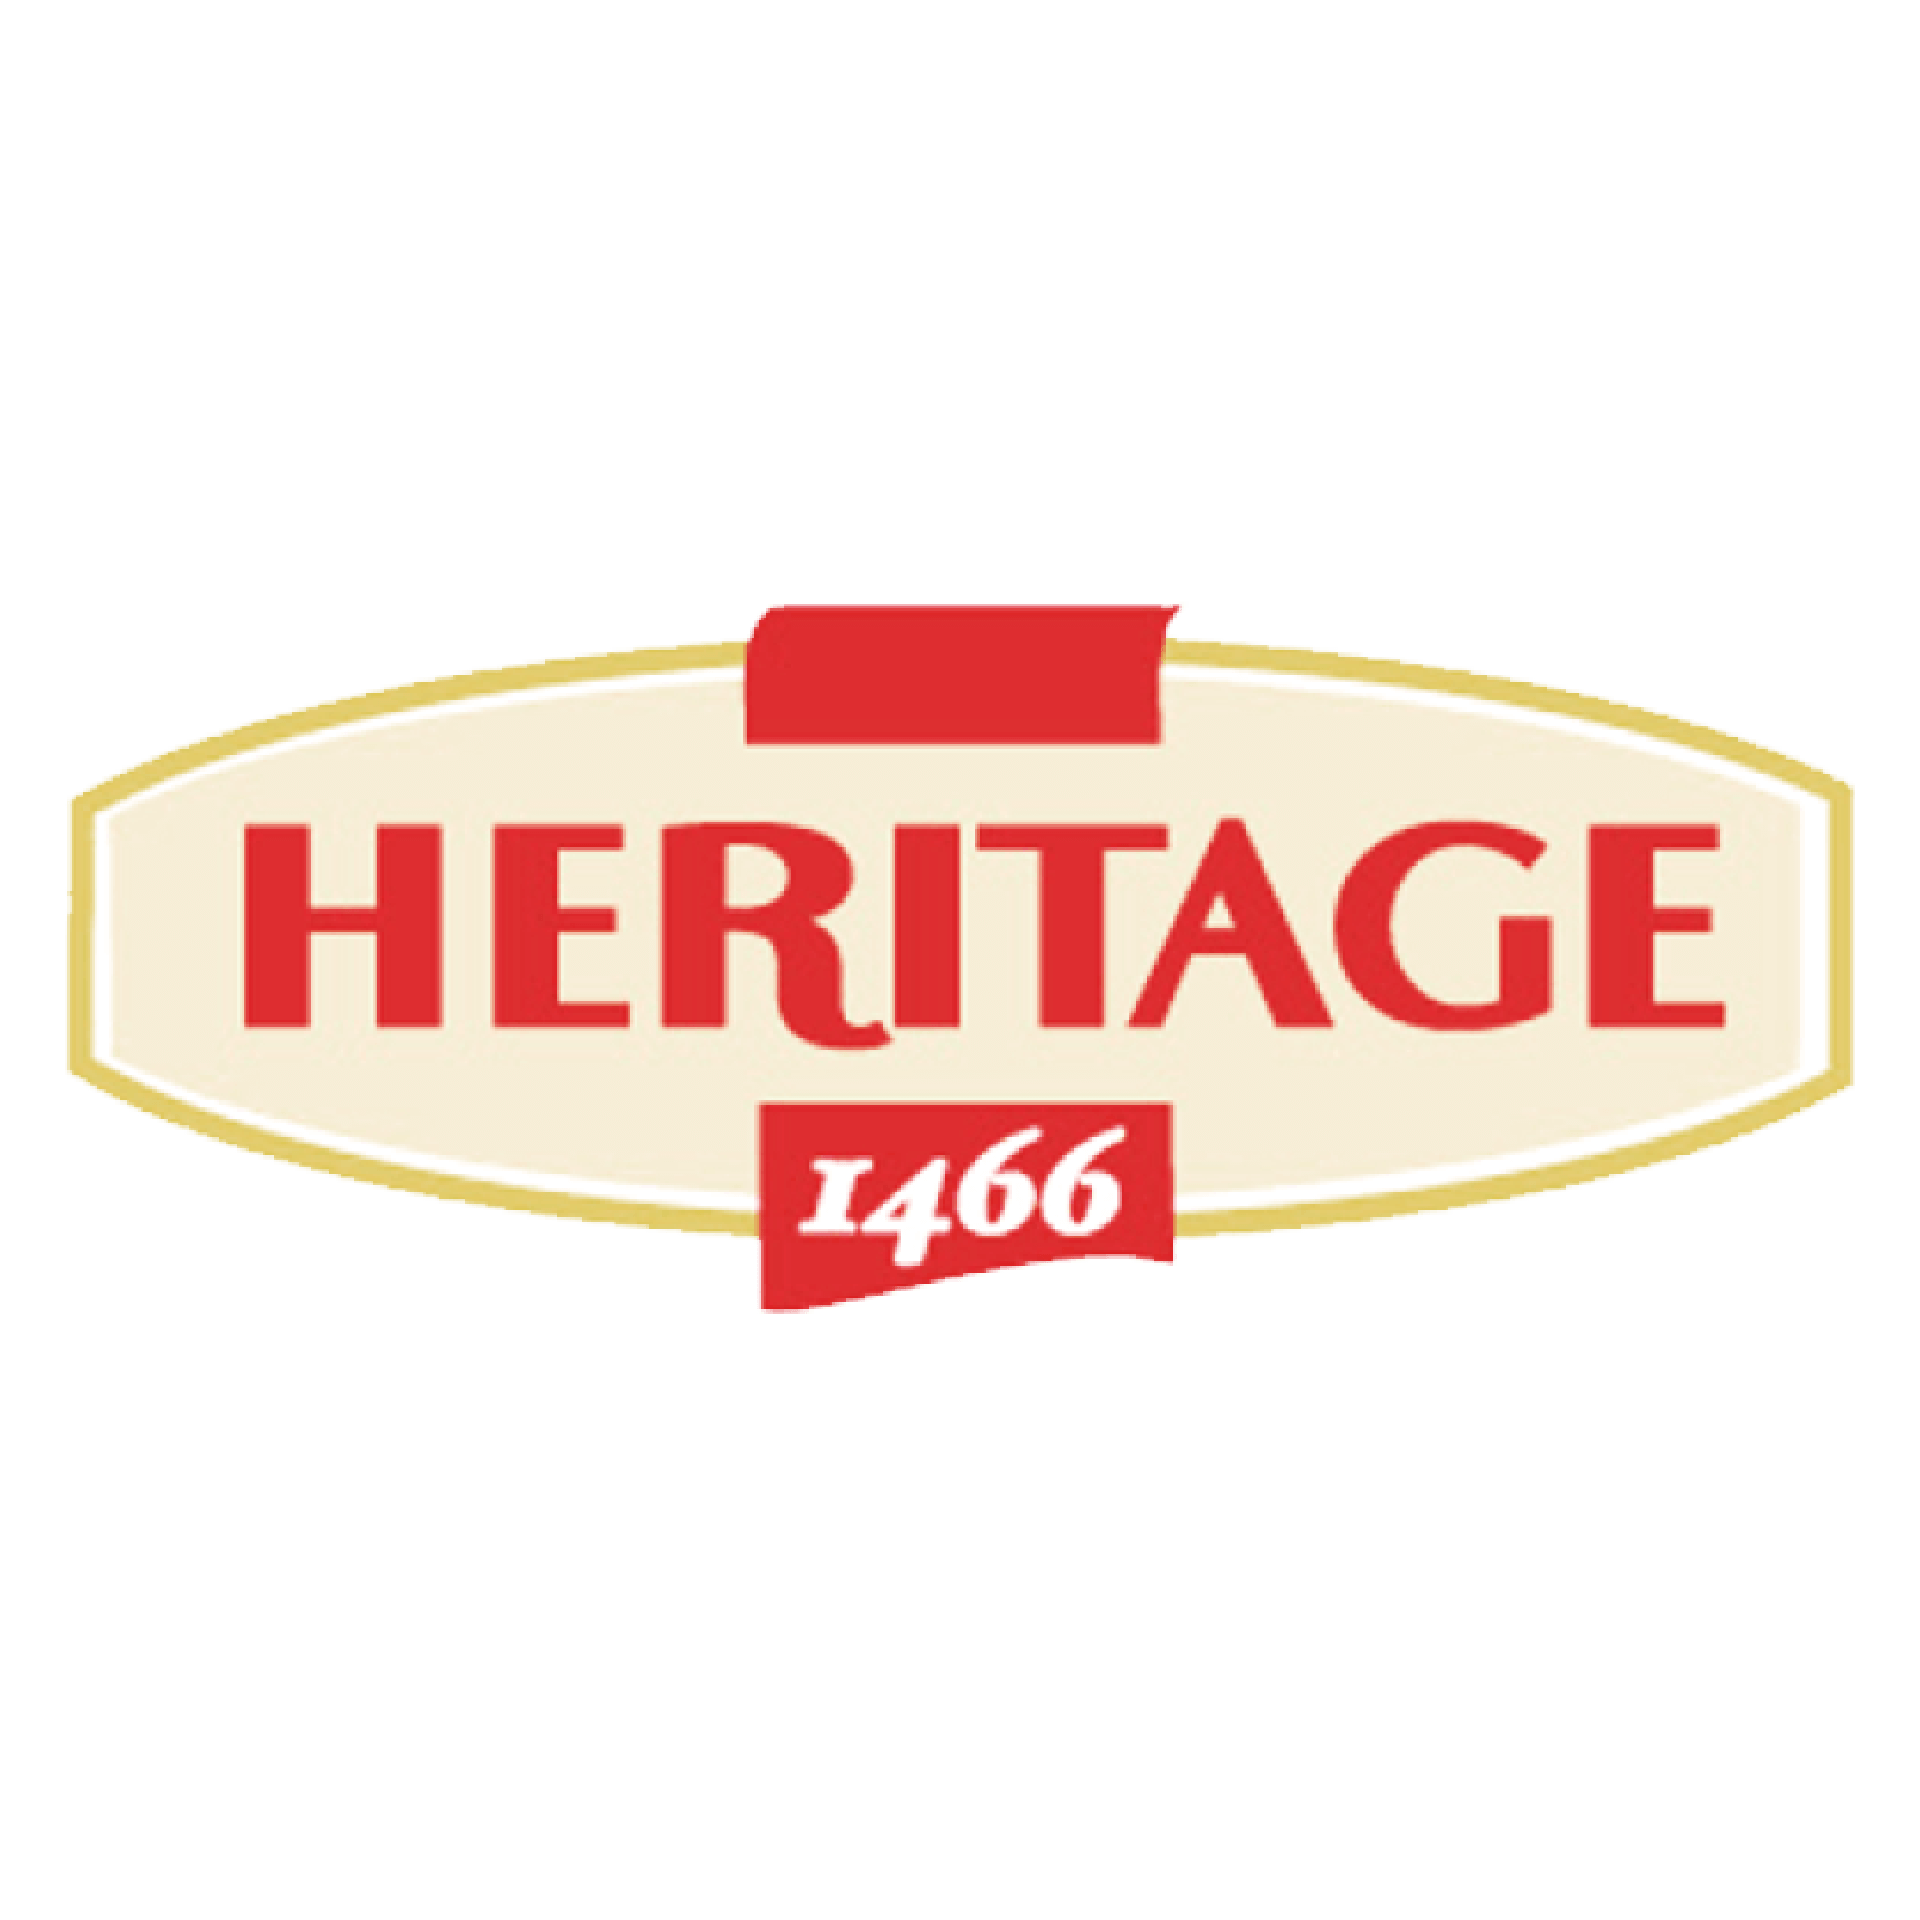 HERITAGE 1466 天然發酵奶油